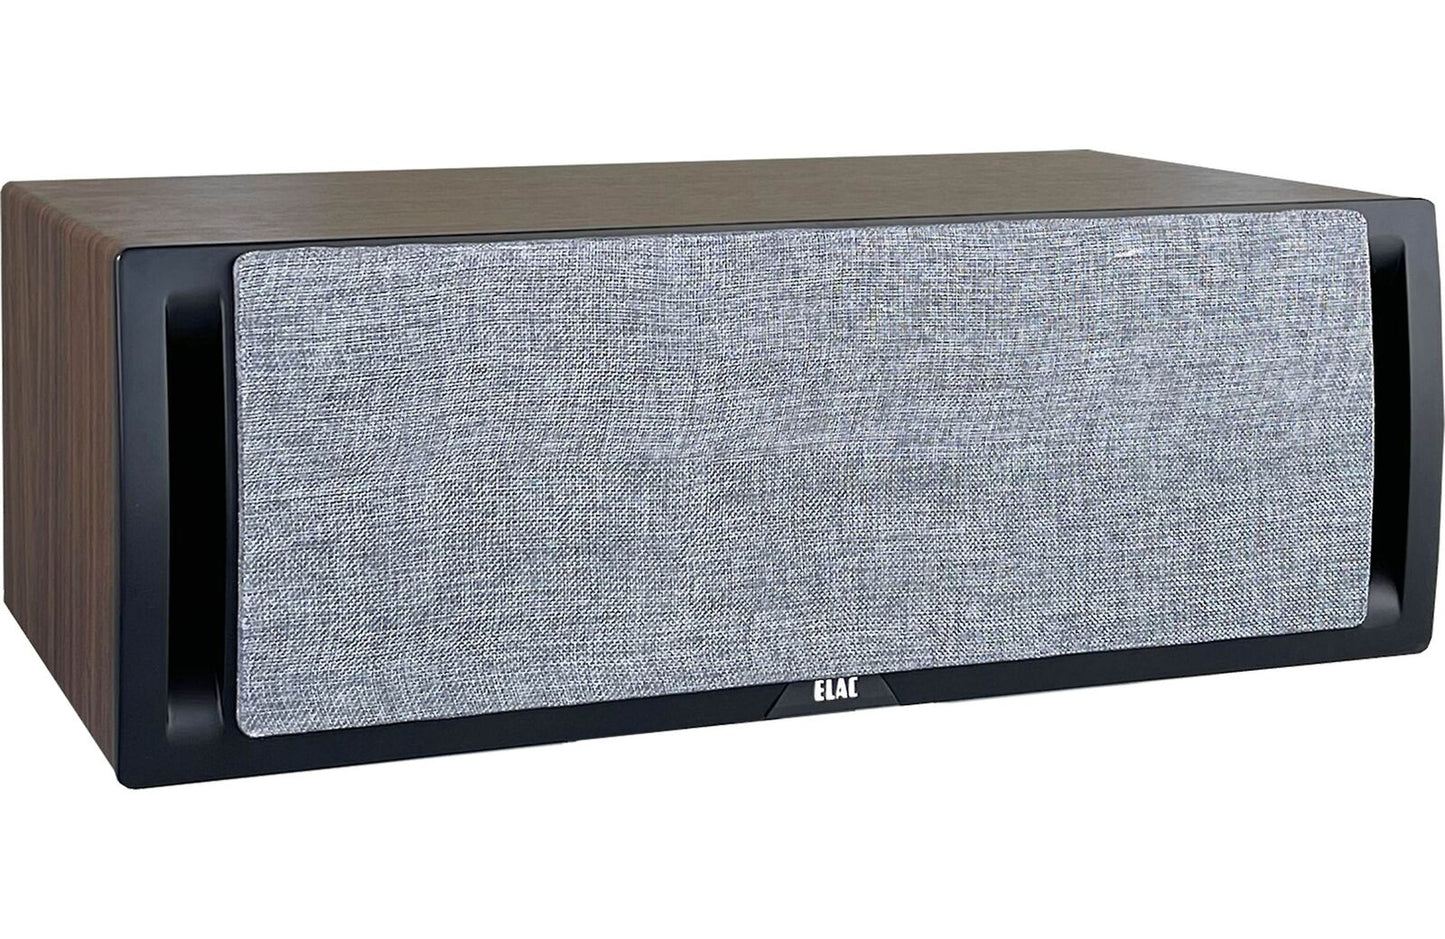 ELAC UCR52-BK 5 1/4” Uni-Fi Reference Center Speaker - Black with Walnut